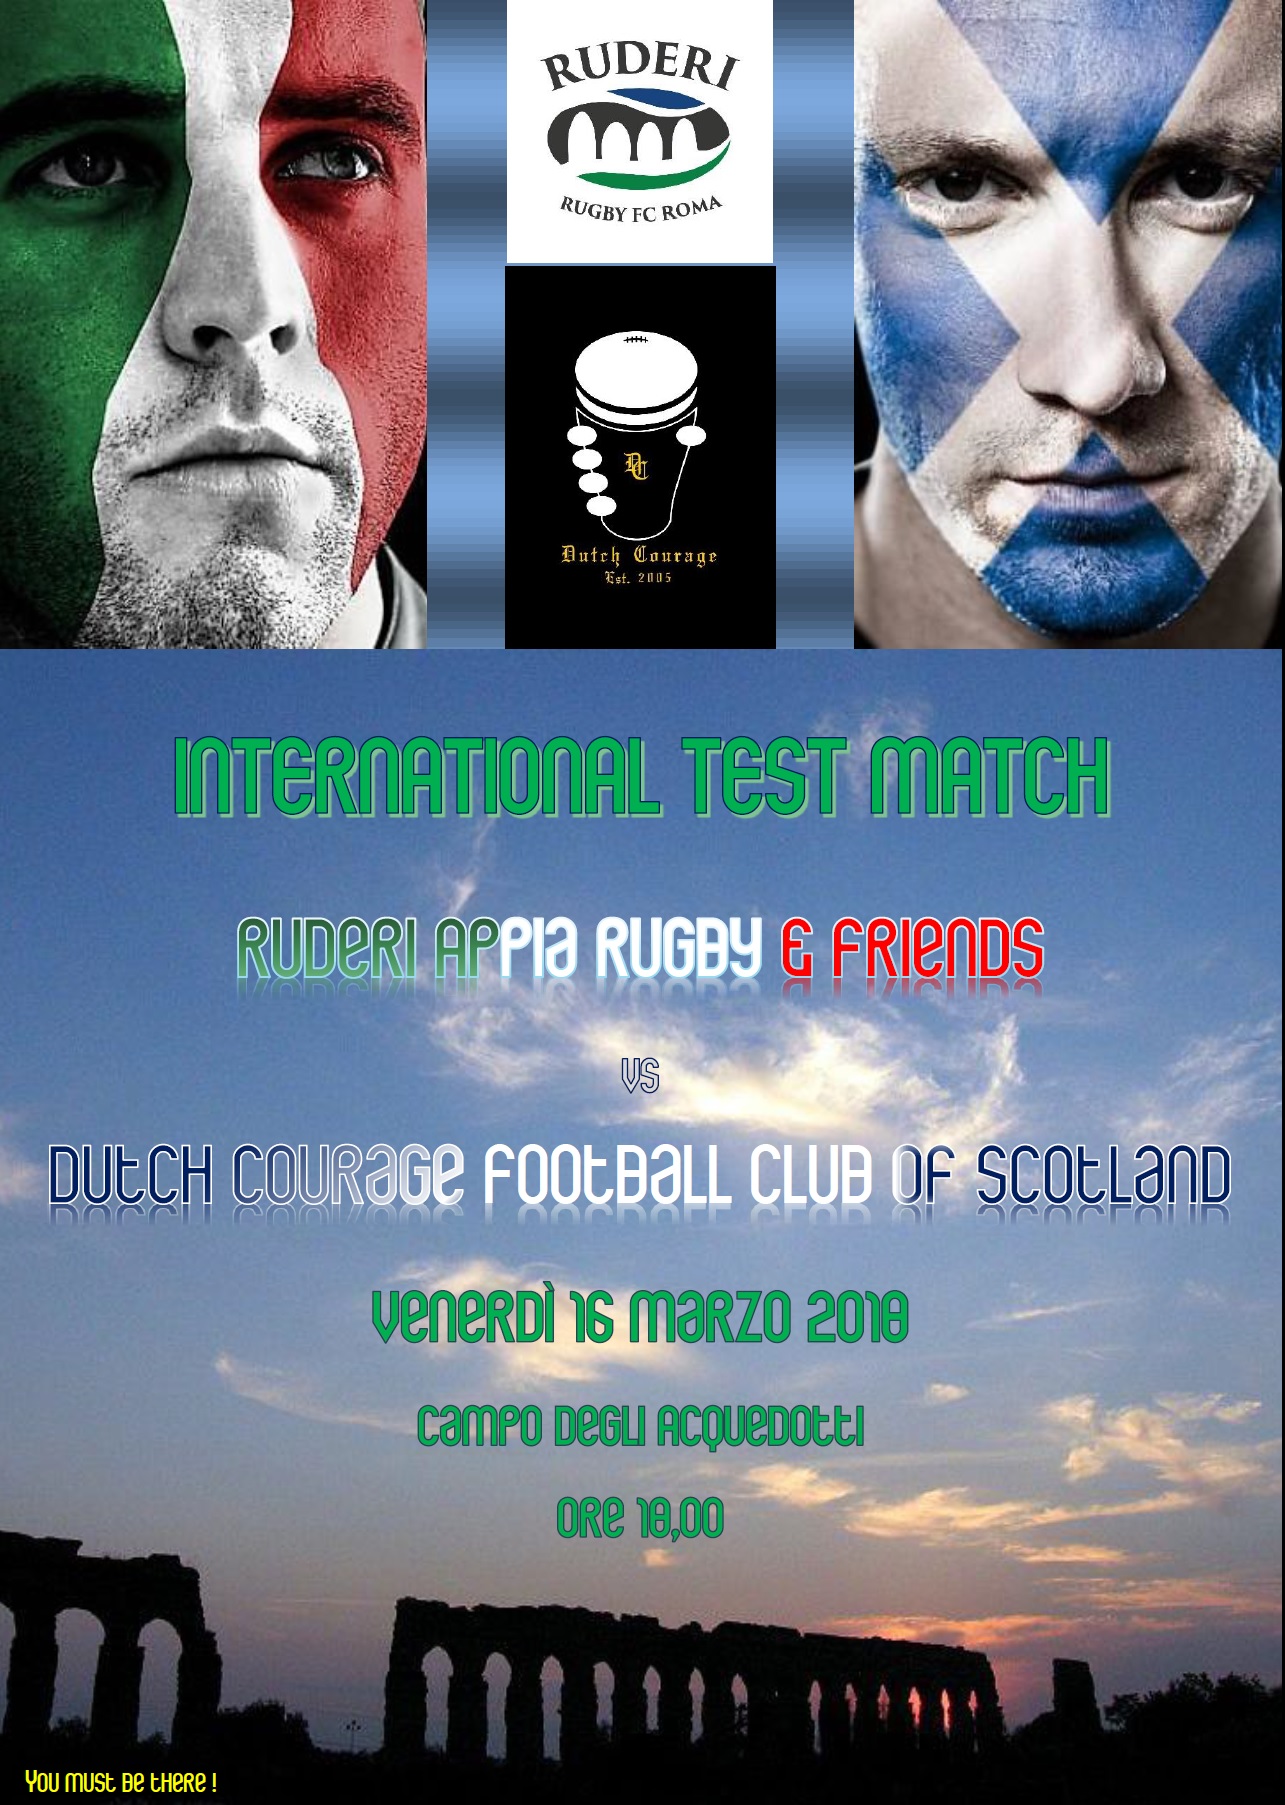 Ruderi Appia Rugby & friends vs Dutch Courage Football Club of Scotland